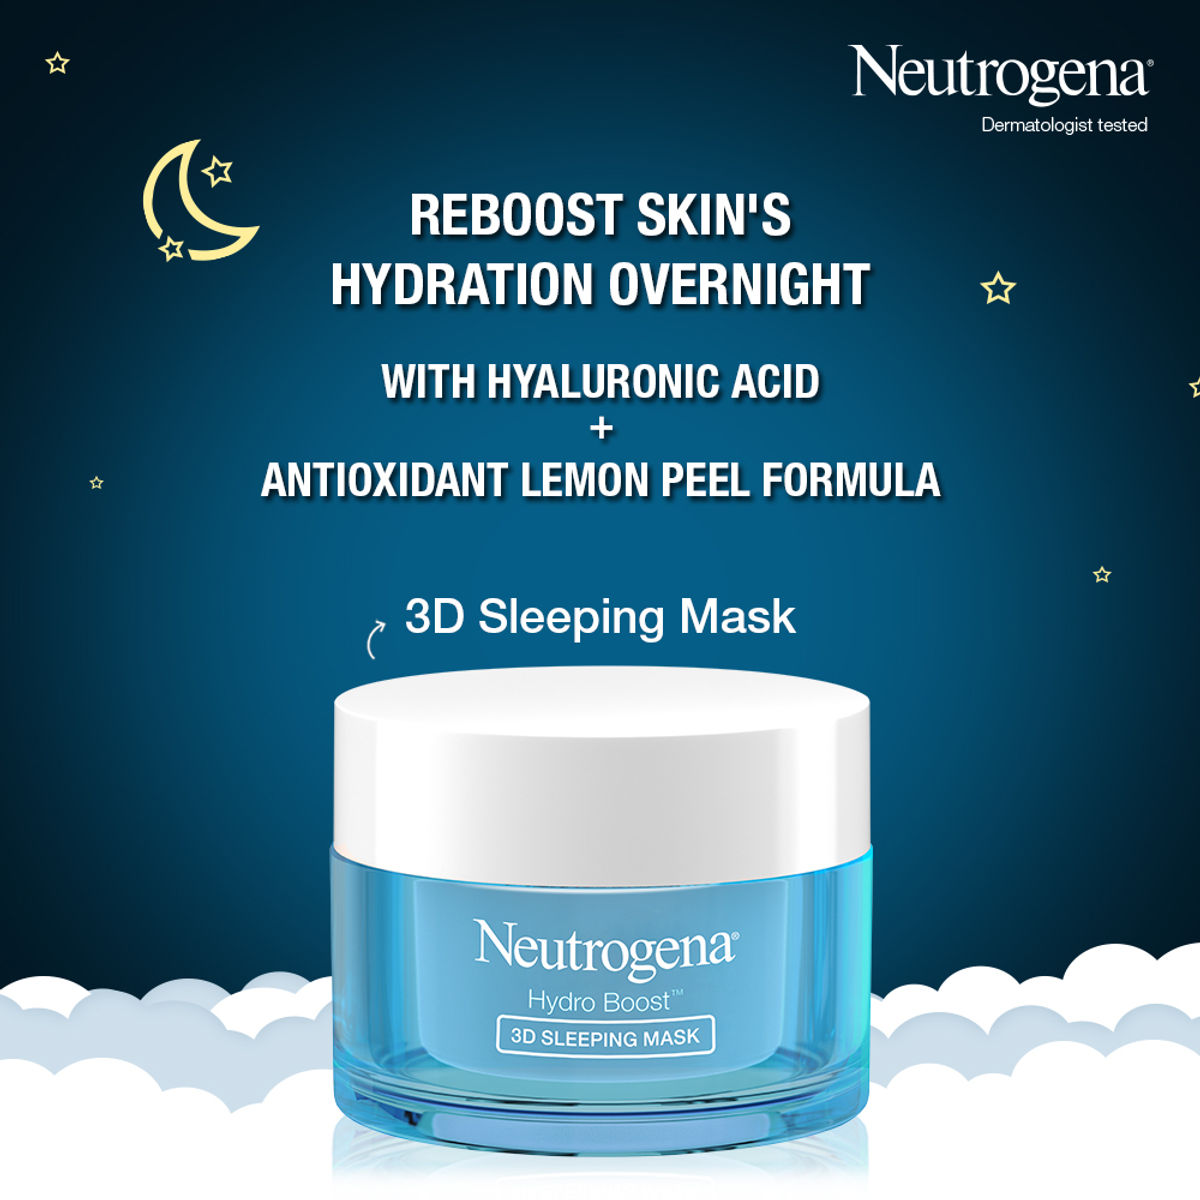 Neutrogena Hydro Boost 3D Sleeping Mask (50 g) Neutrogena